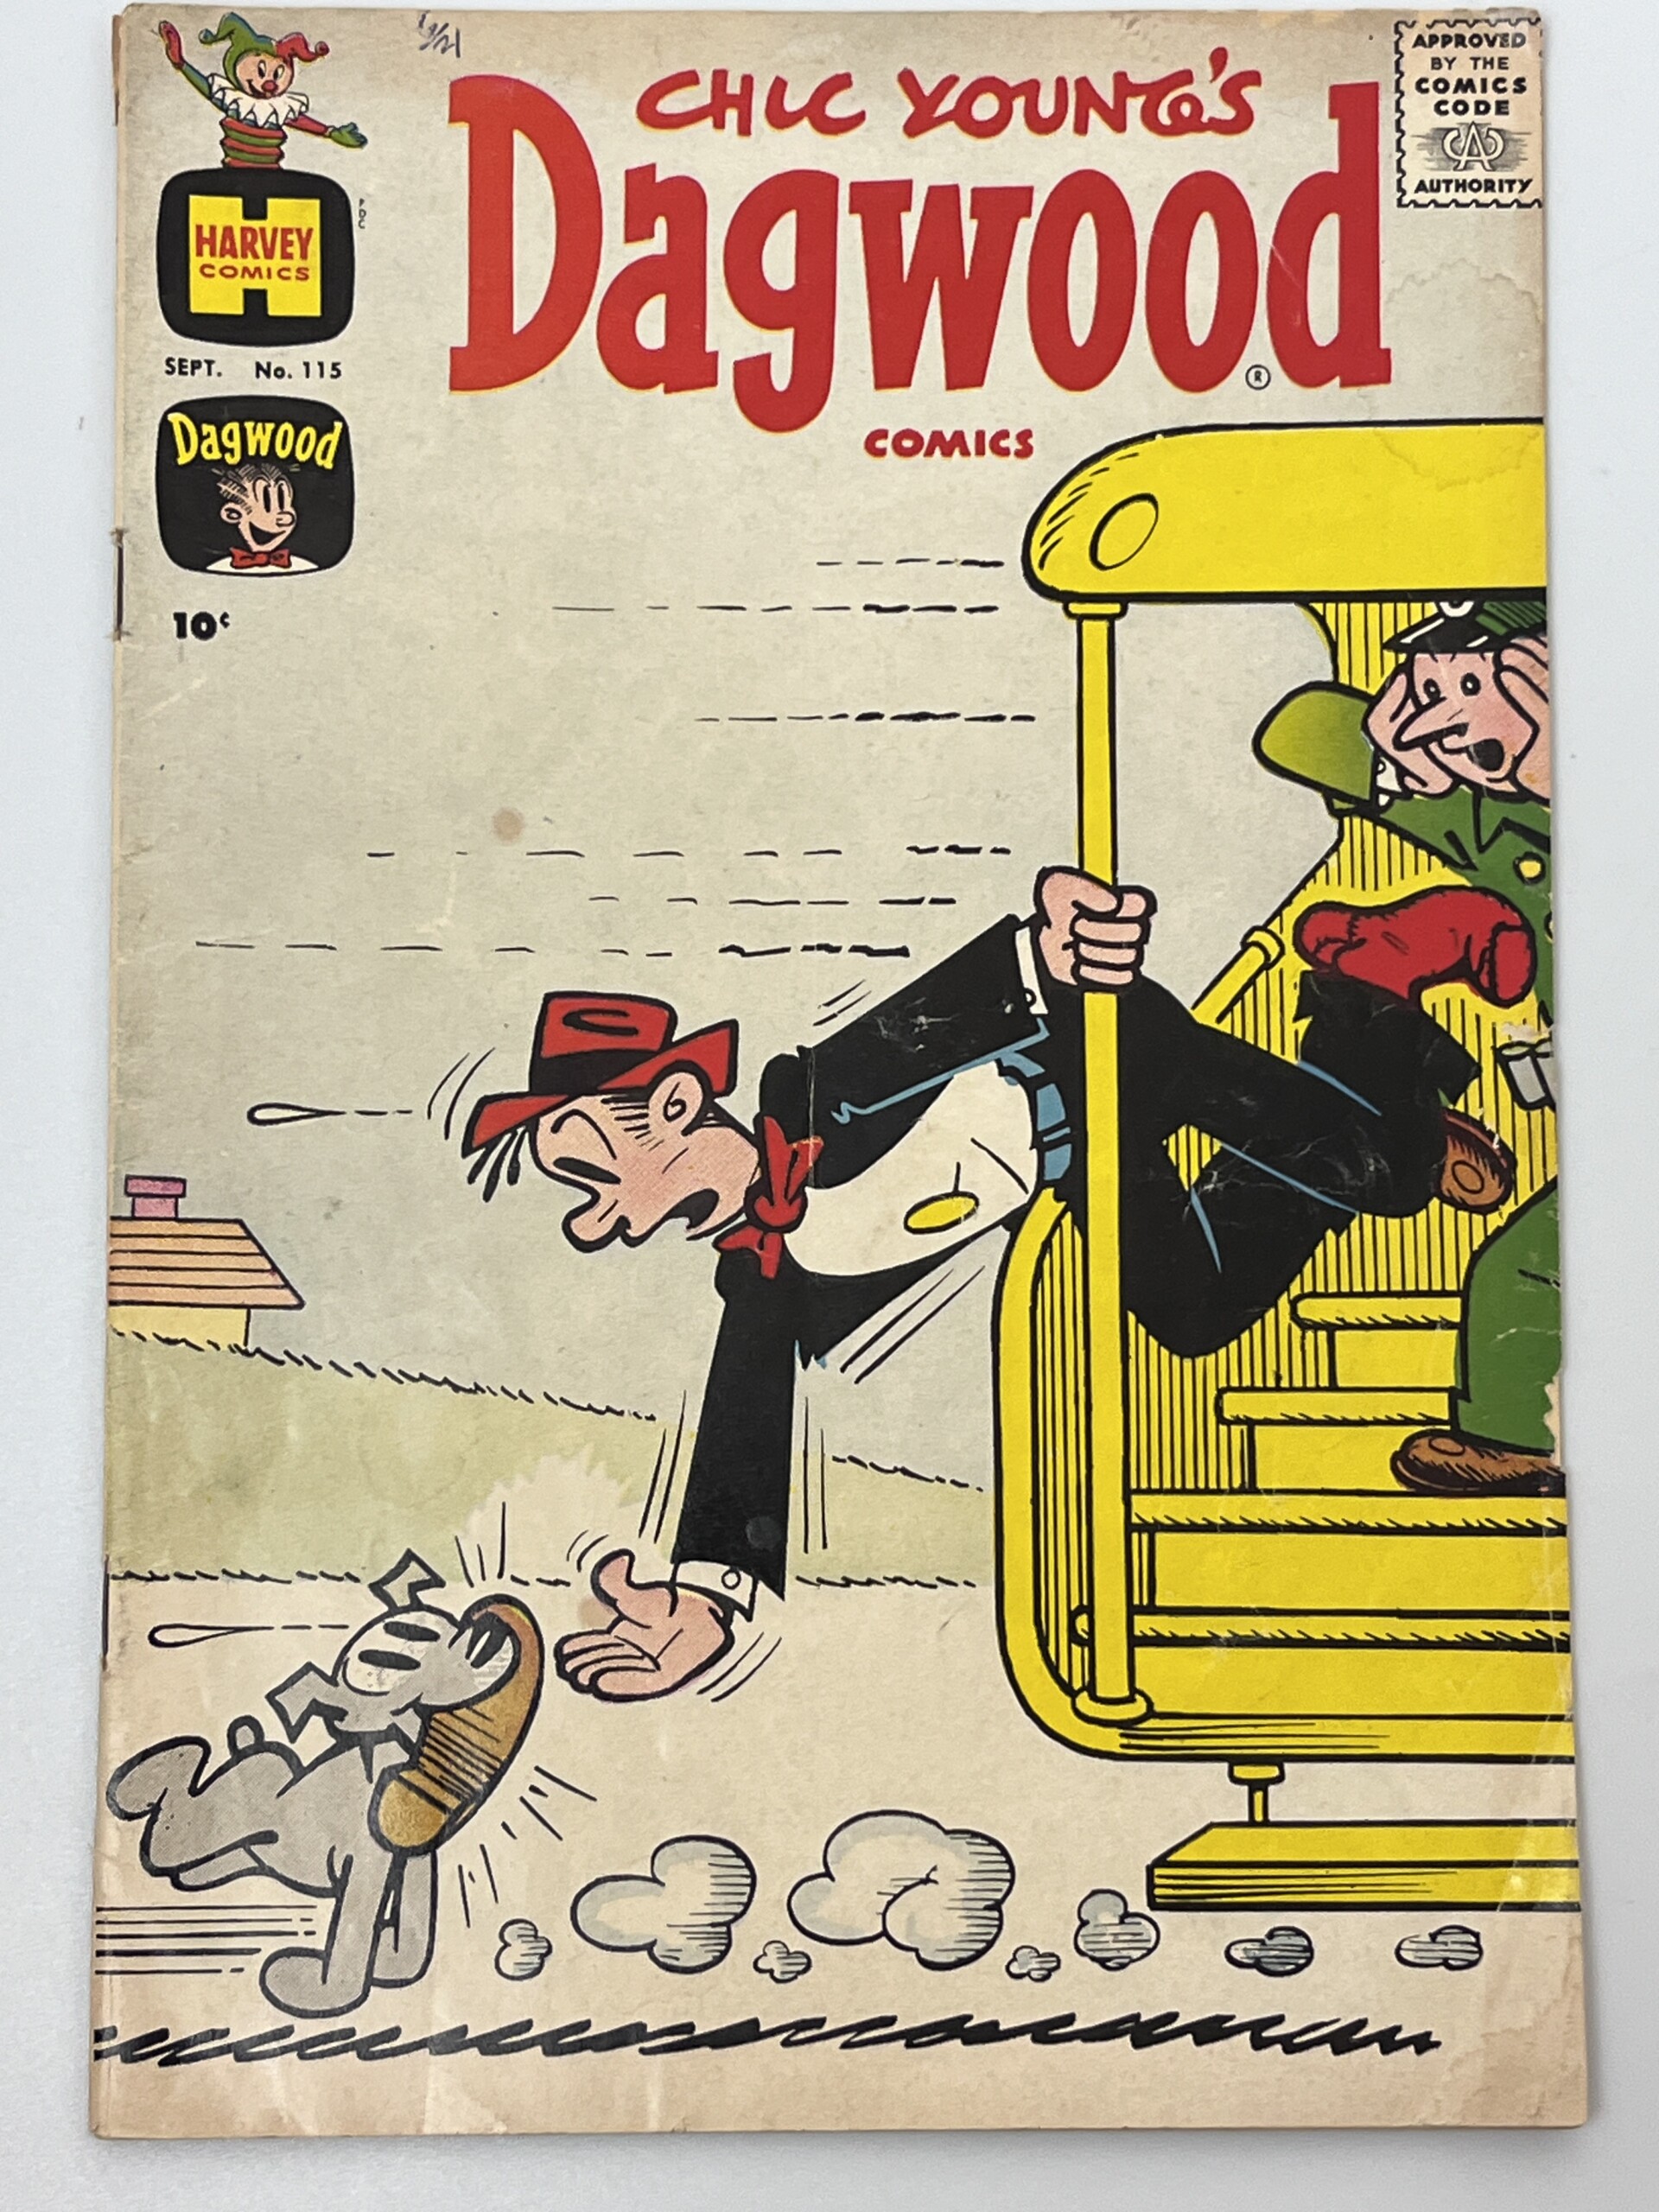 Dagwood #115 (1961) in 4.0 Very Good